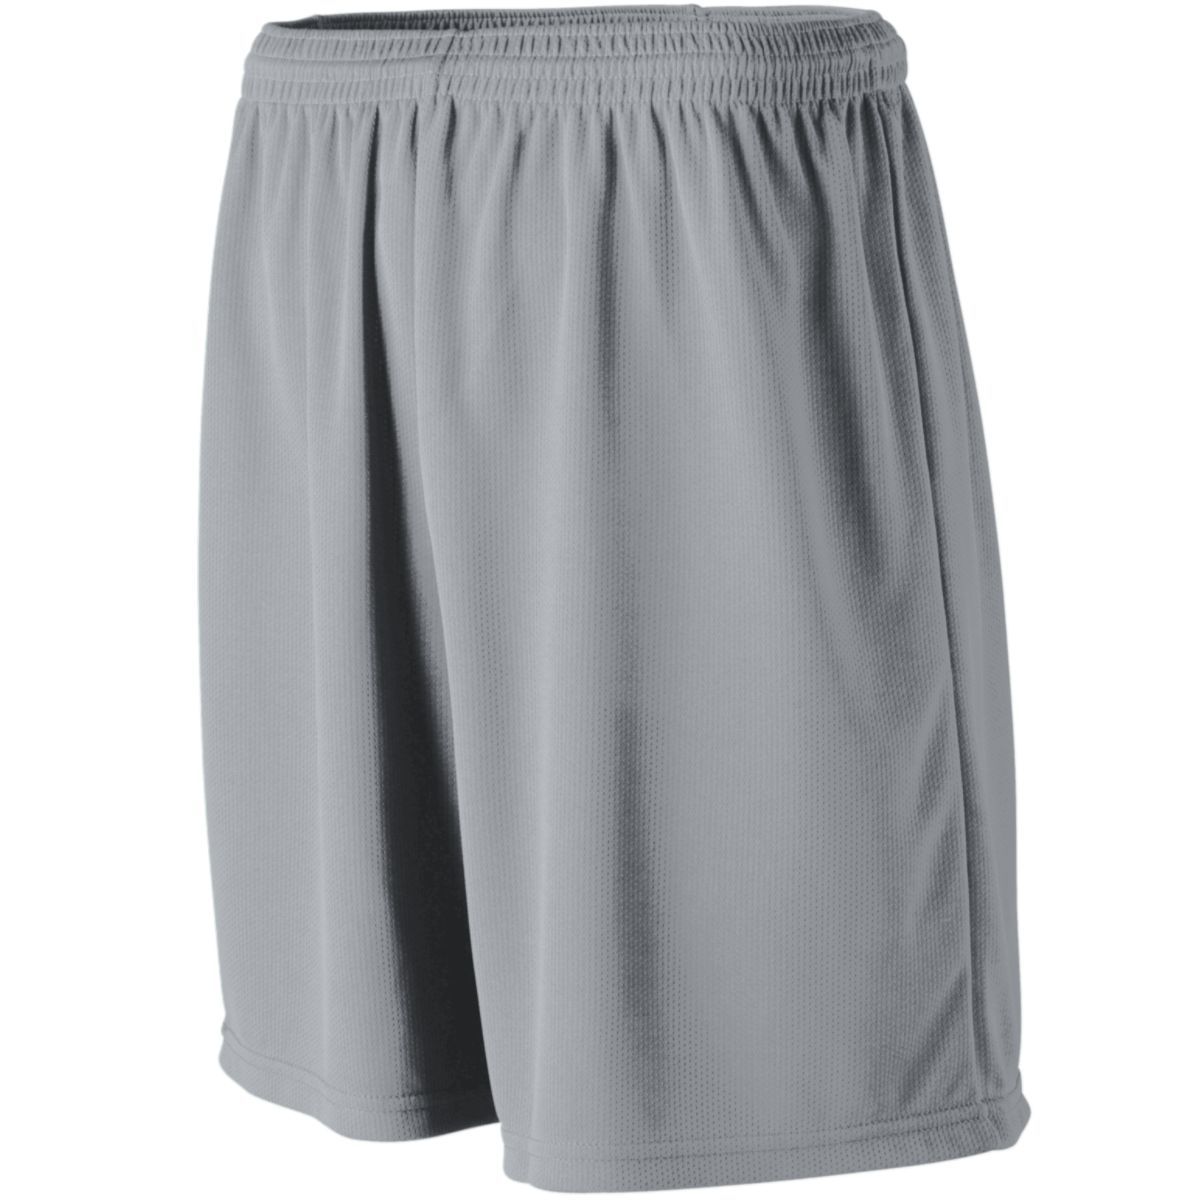 Wicking Mesh Athletic Shorts 805